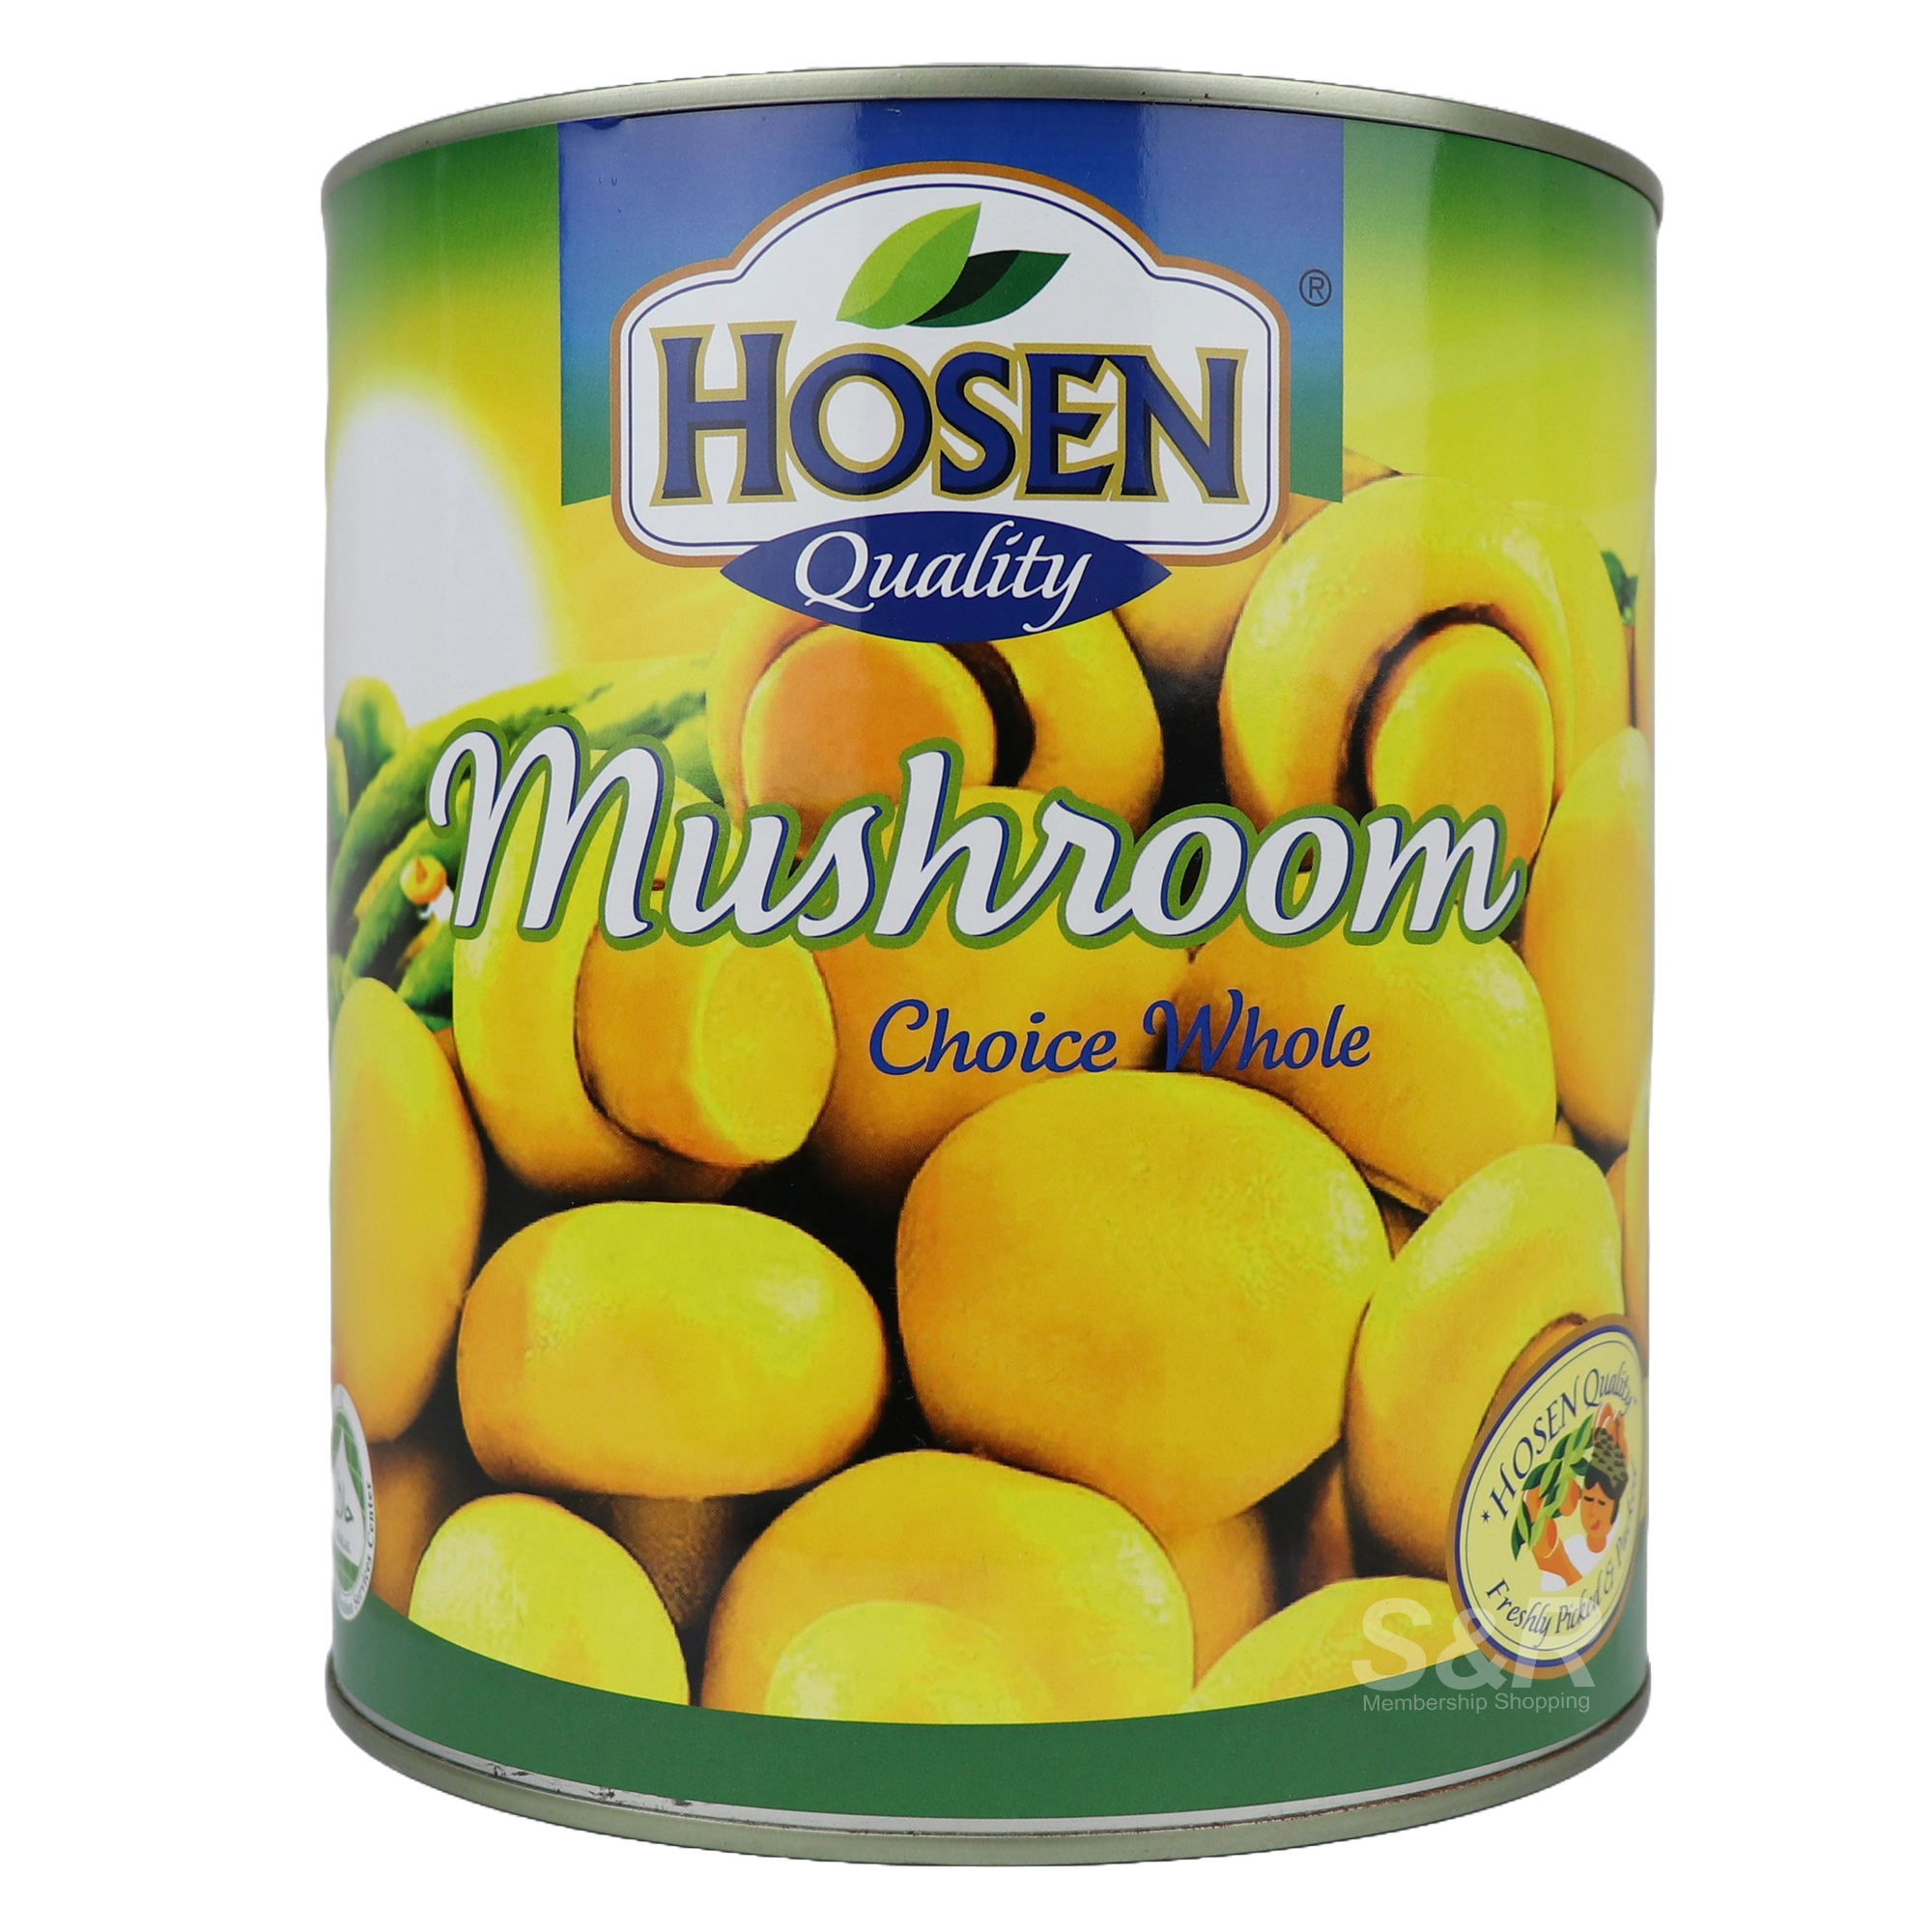 Hosen Quality Mushroom Whole 2.84kg